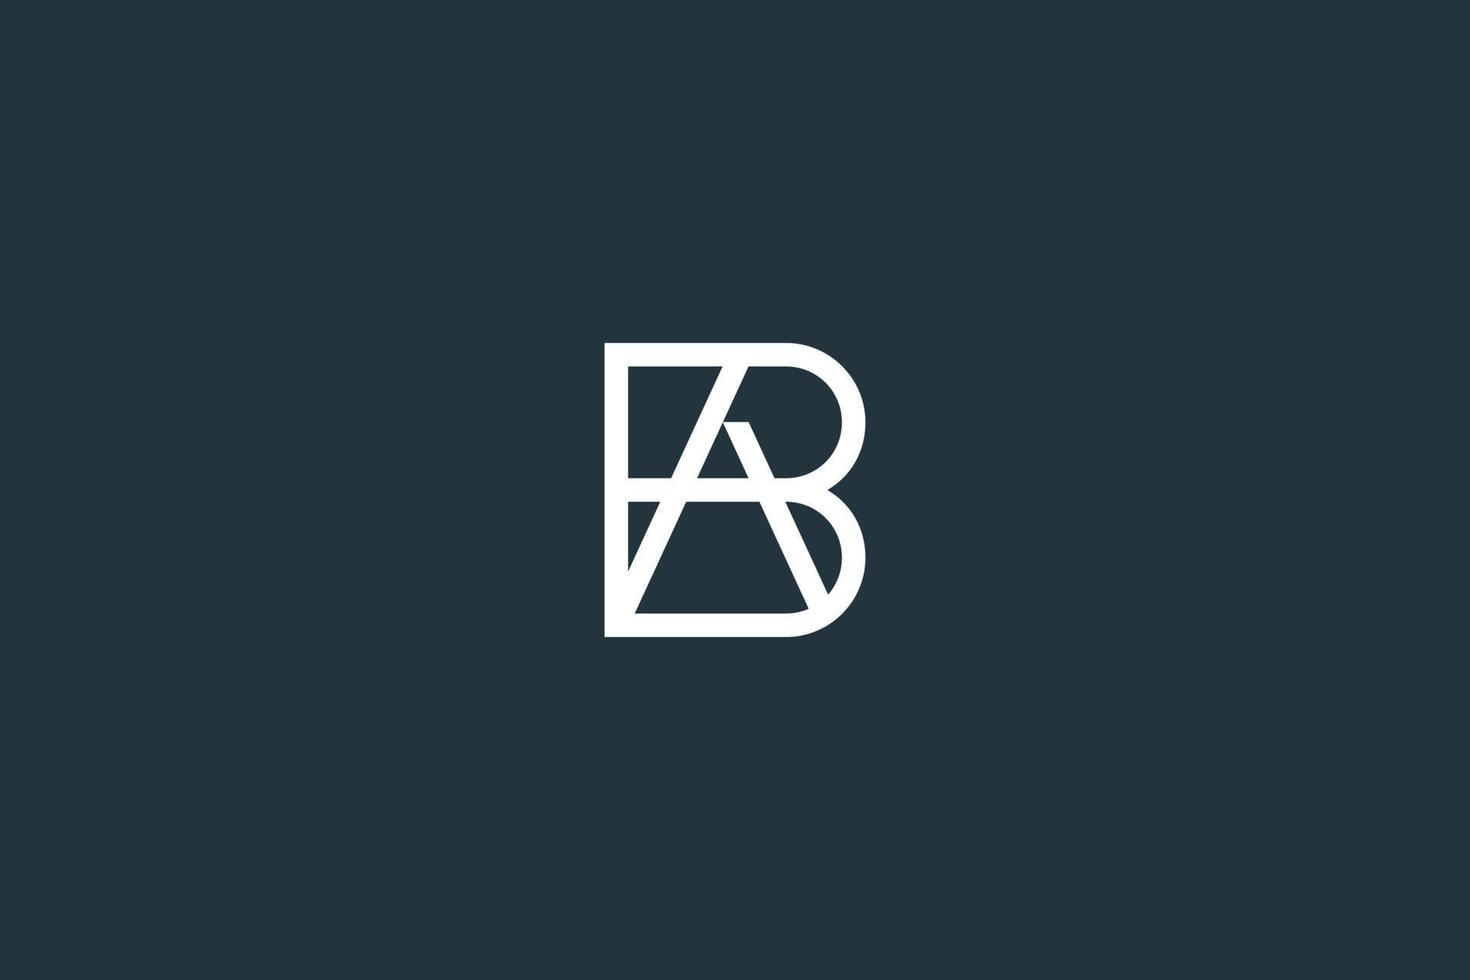 Minimal Letter AB or BA Logo Design Vector Template